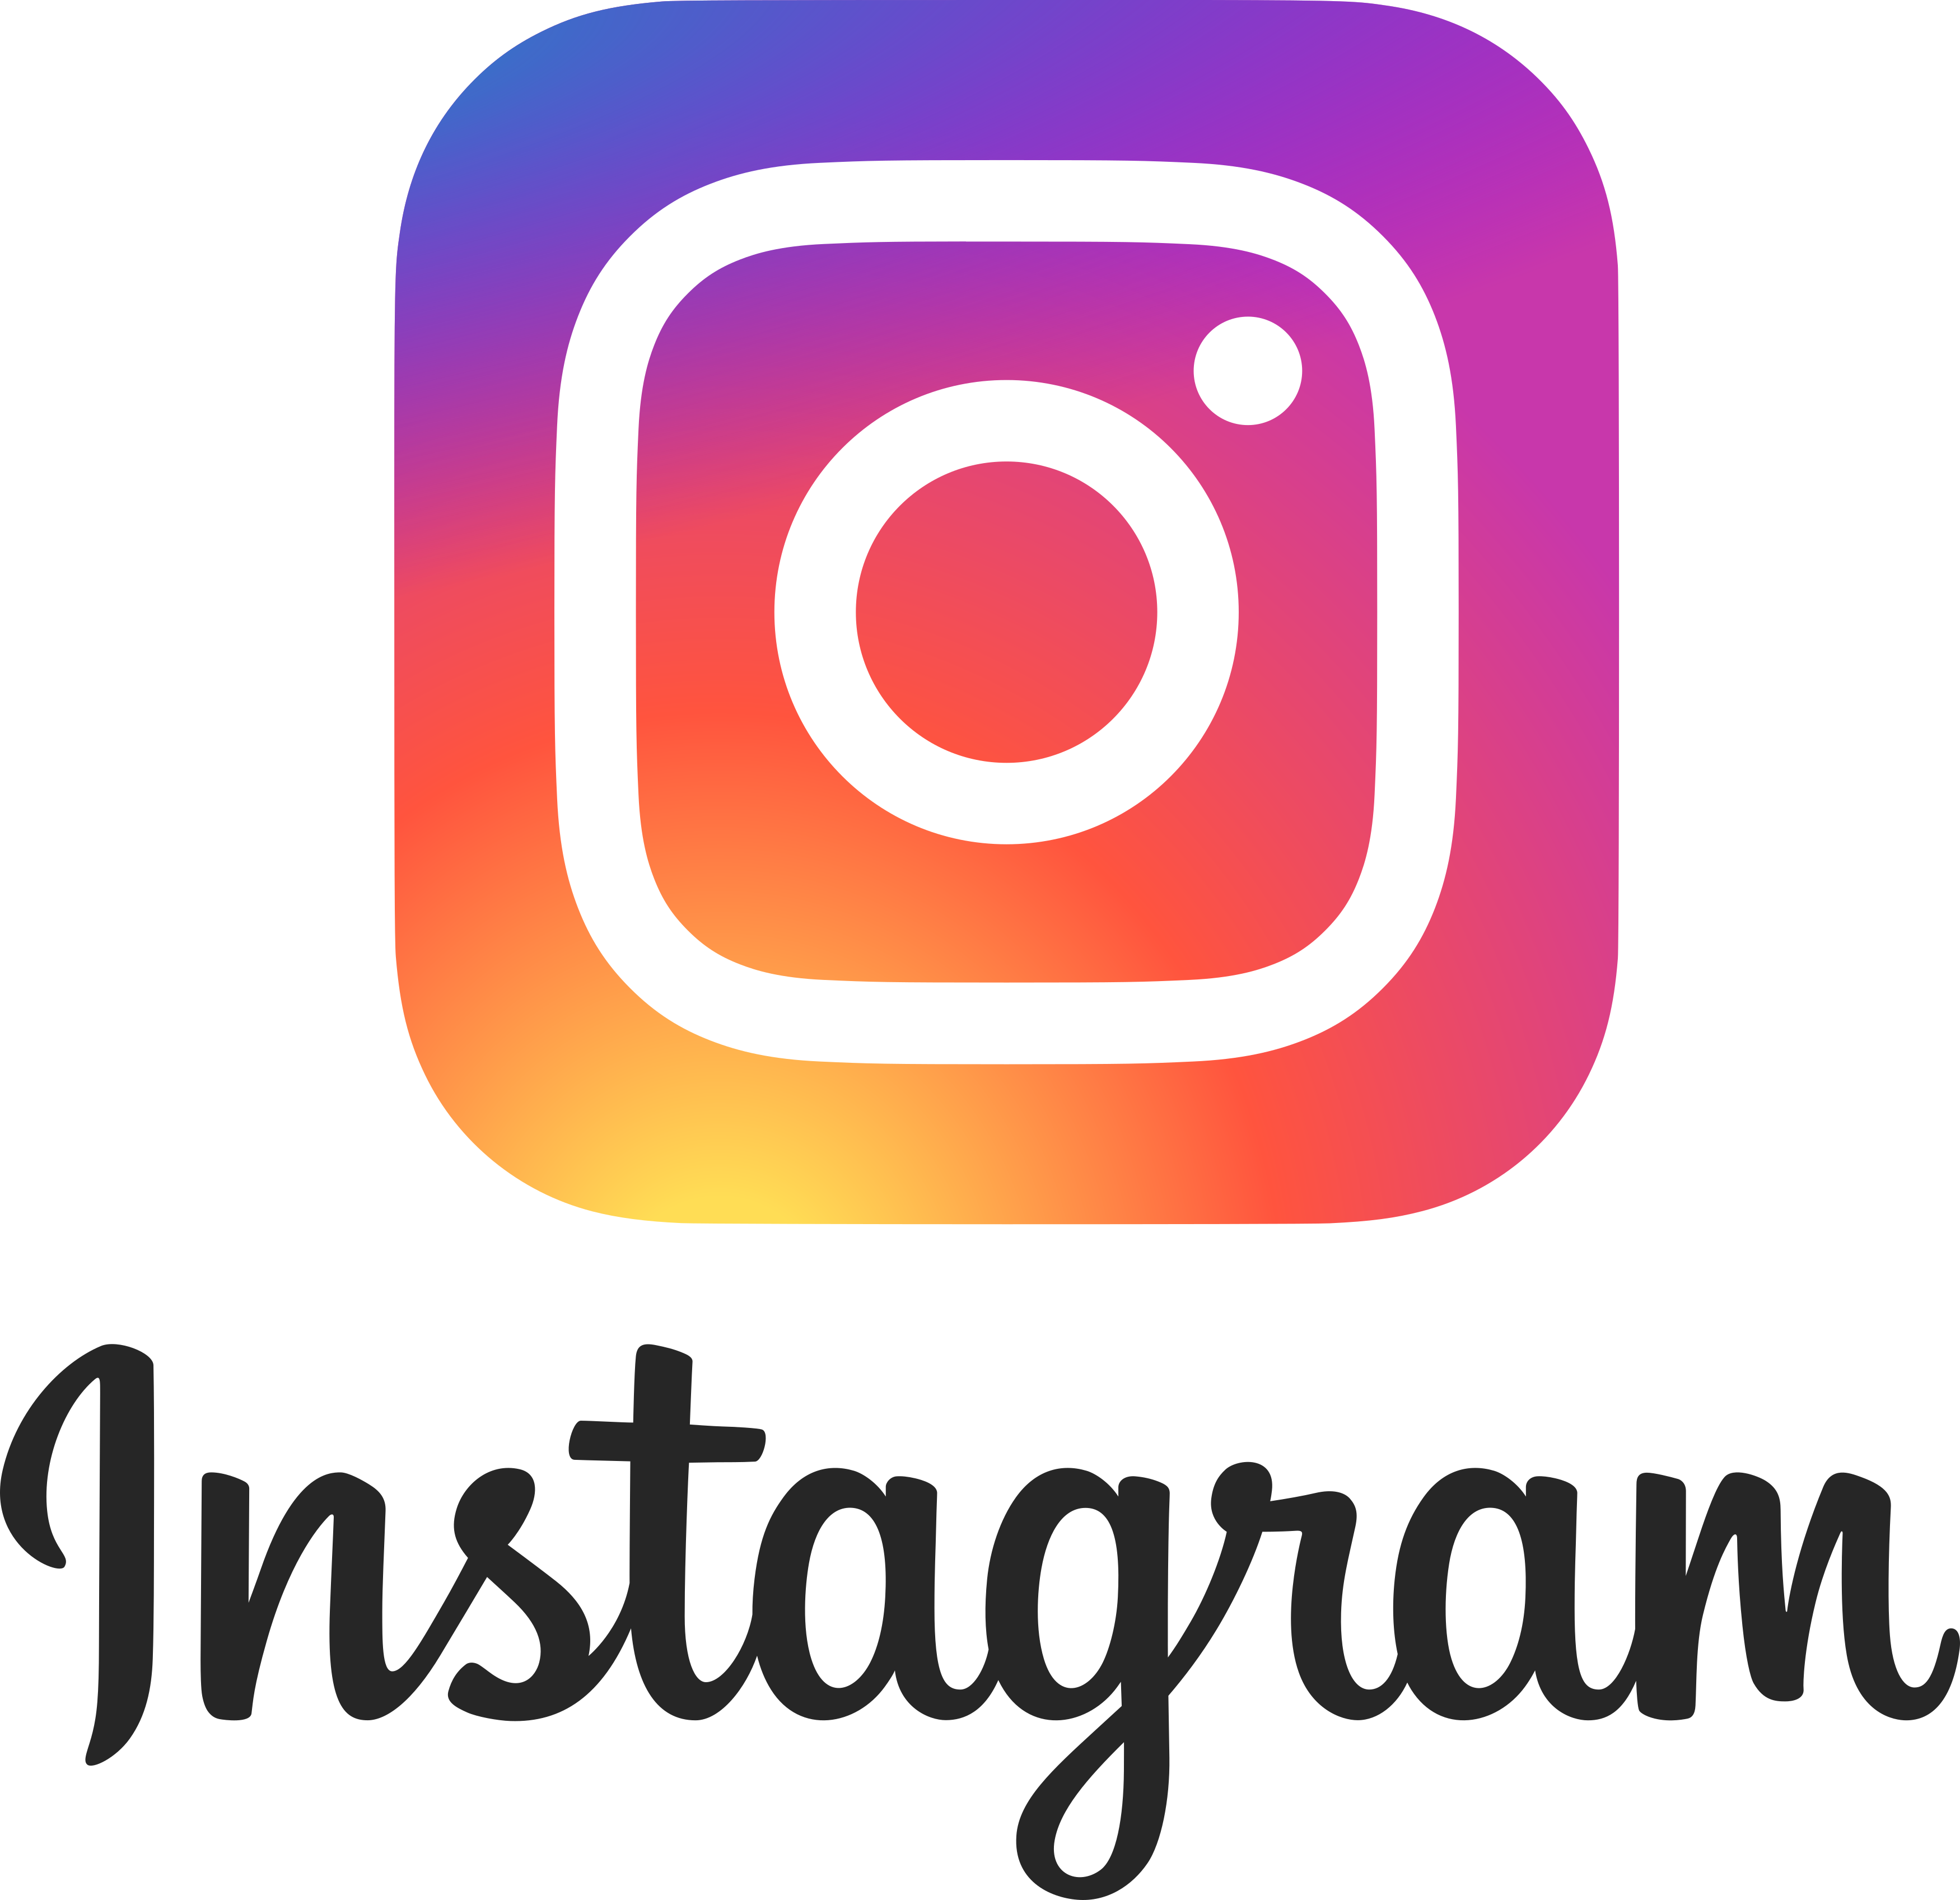 instagram-png-instagram-logo-2-png-8-de-abril-de-2017-927-kb-3500-3393-3500